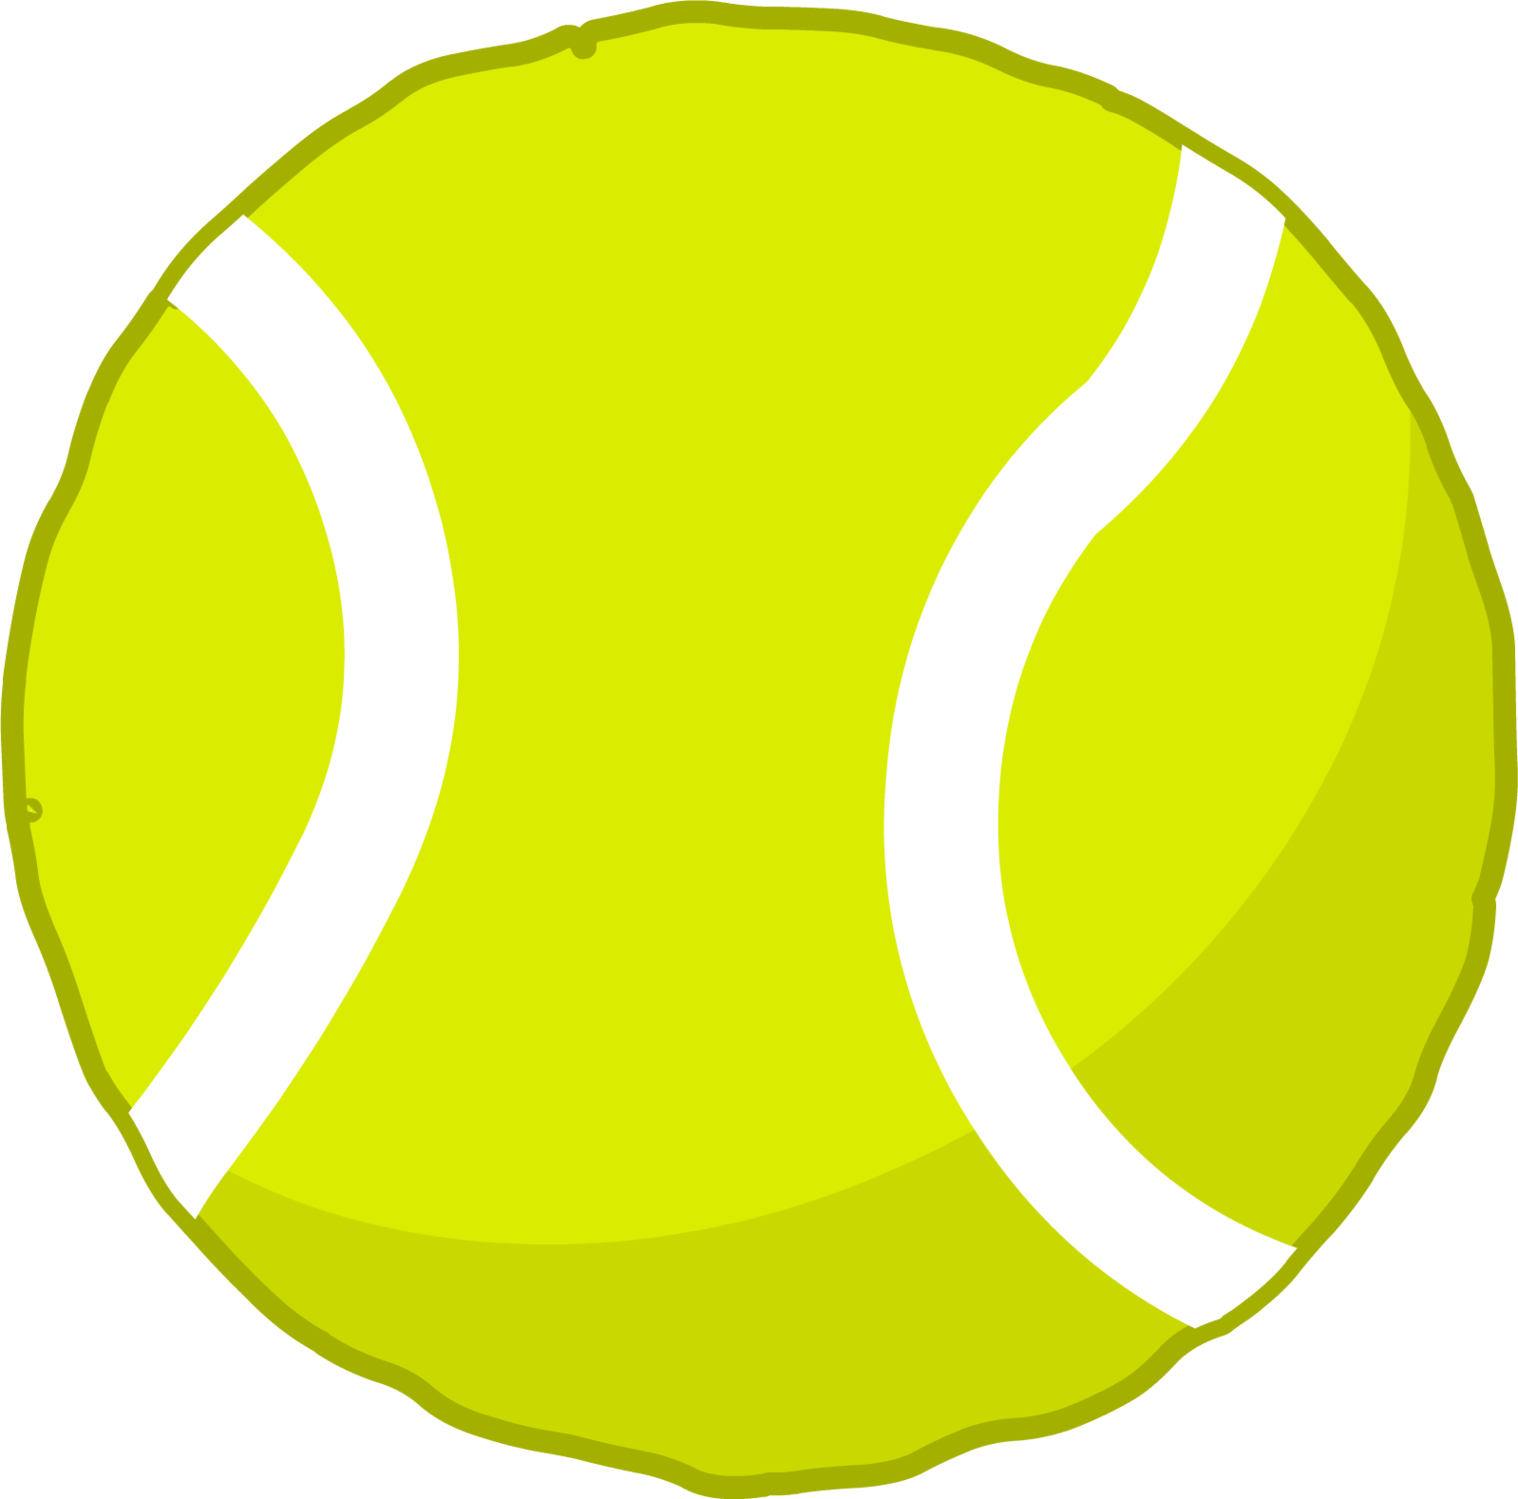 Tennis ball clipart - Clipartix